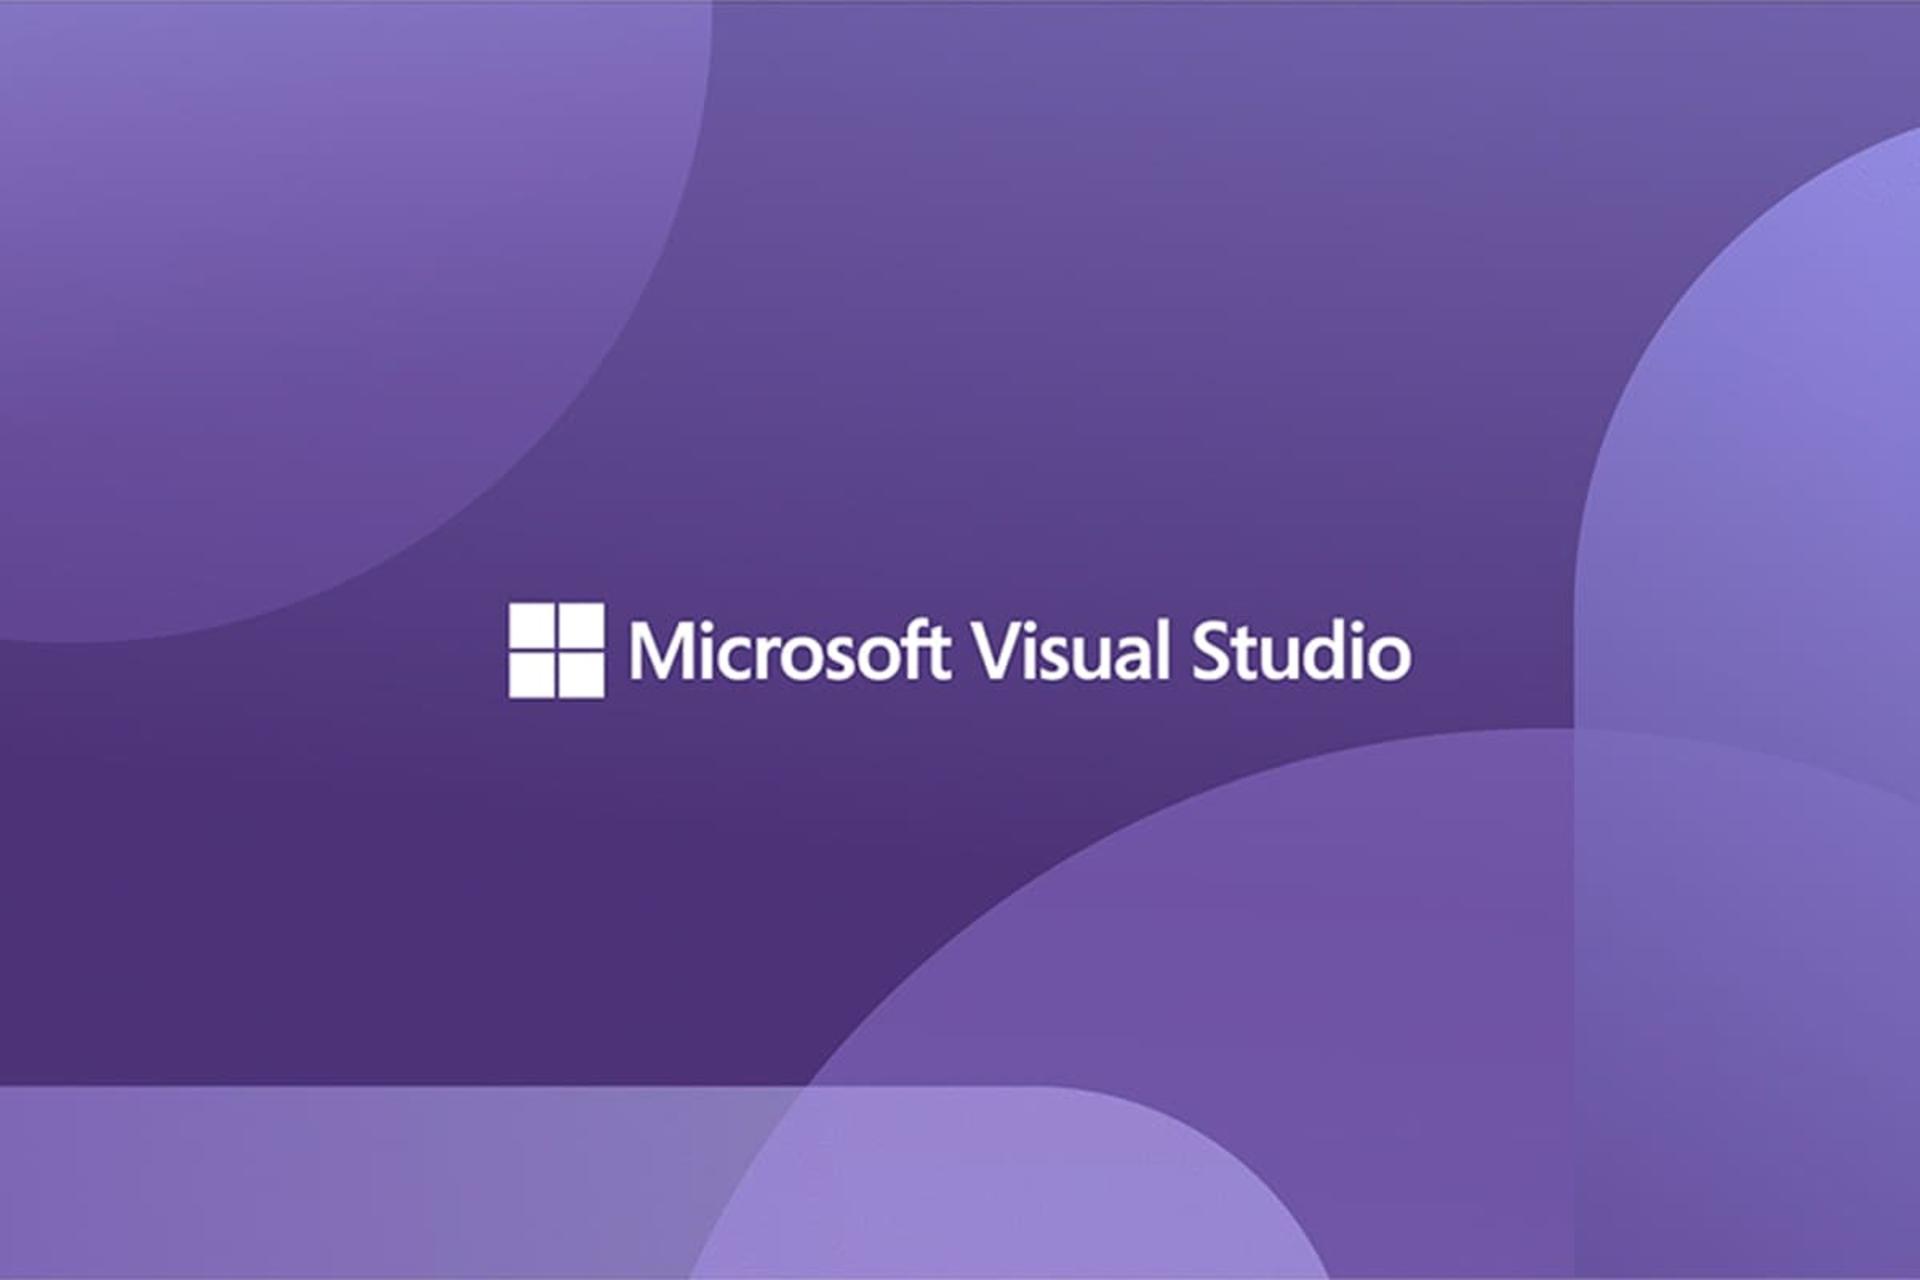 مایکروسافت ویژوال استودیو / Visual Studio لوگو پس زمینه بنفش